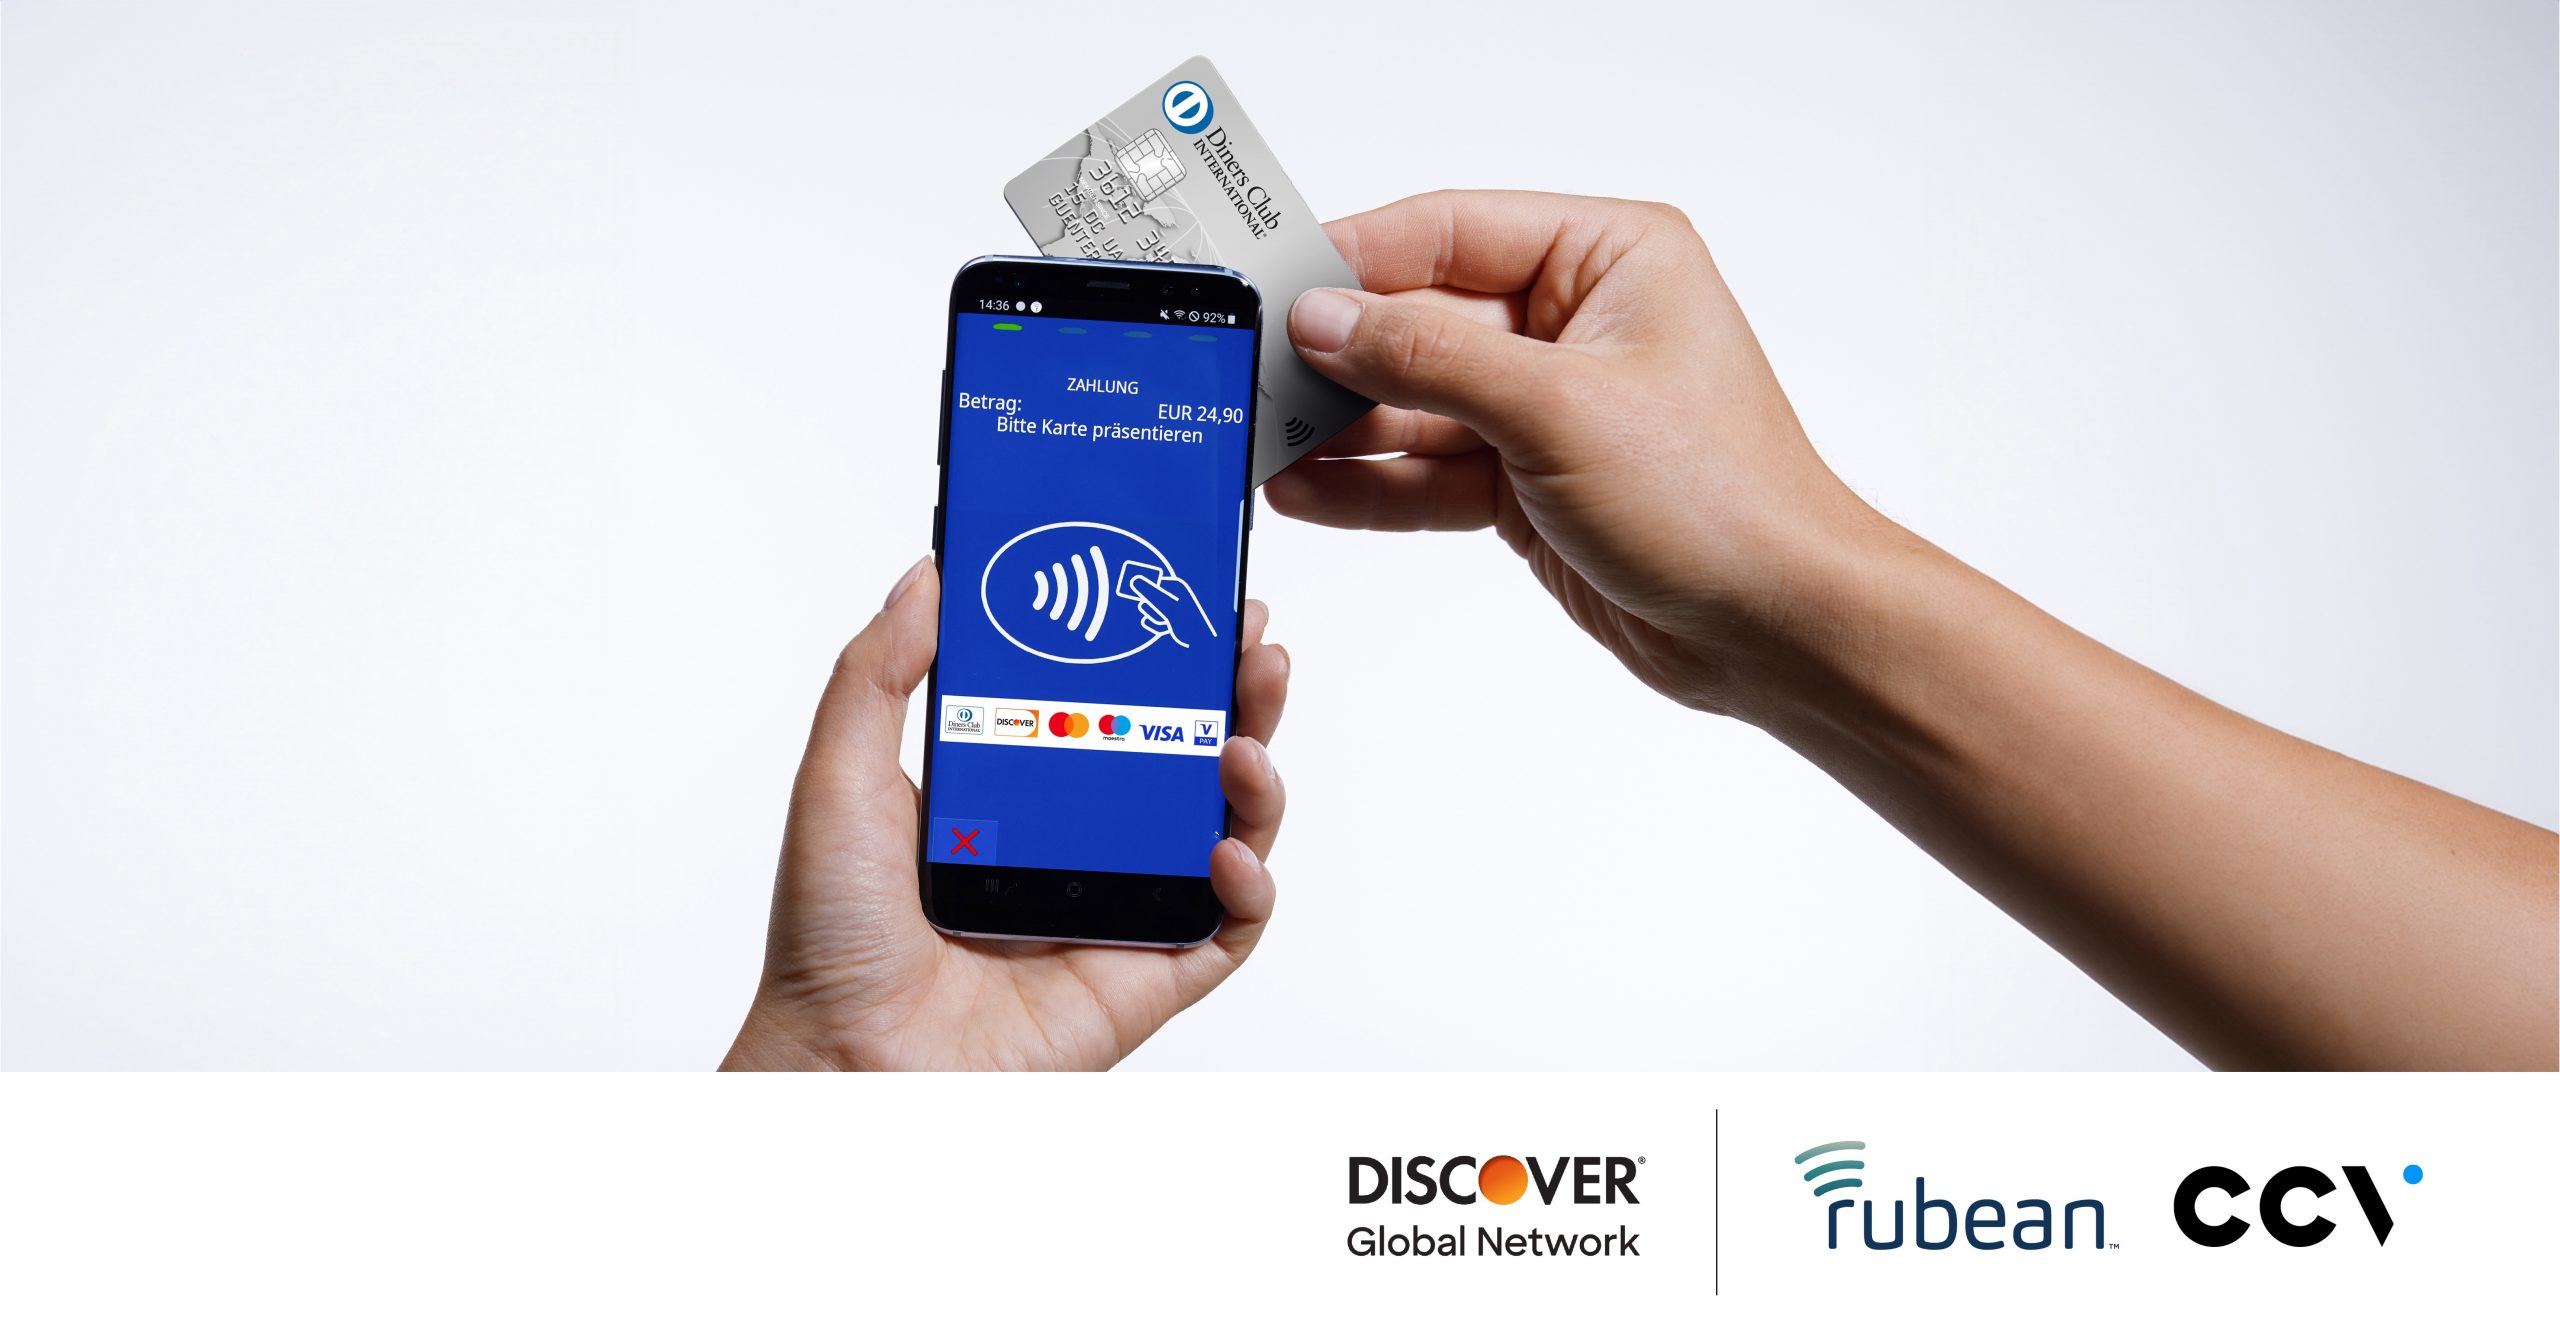 Rubean AG fügt Discovers Kreditkarten zu seiner SoftPOS Payment Plattform hinzu